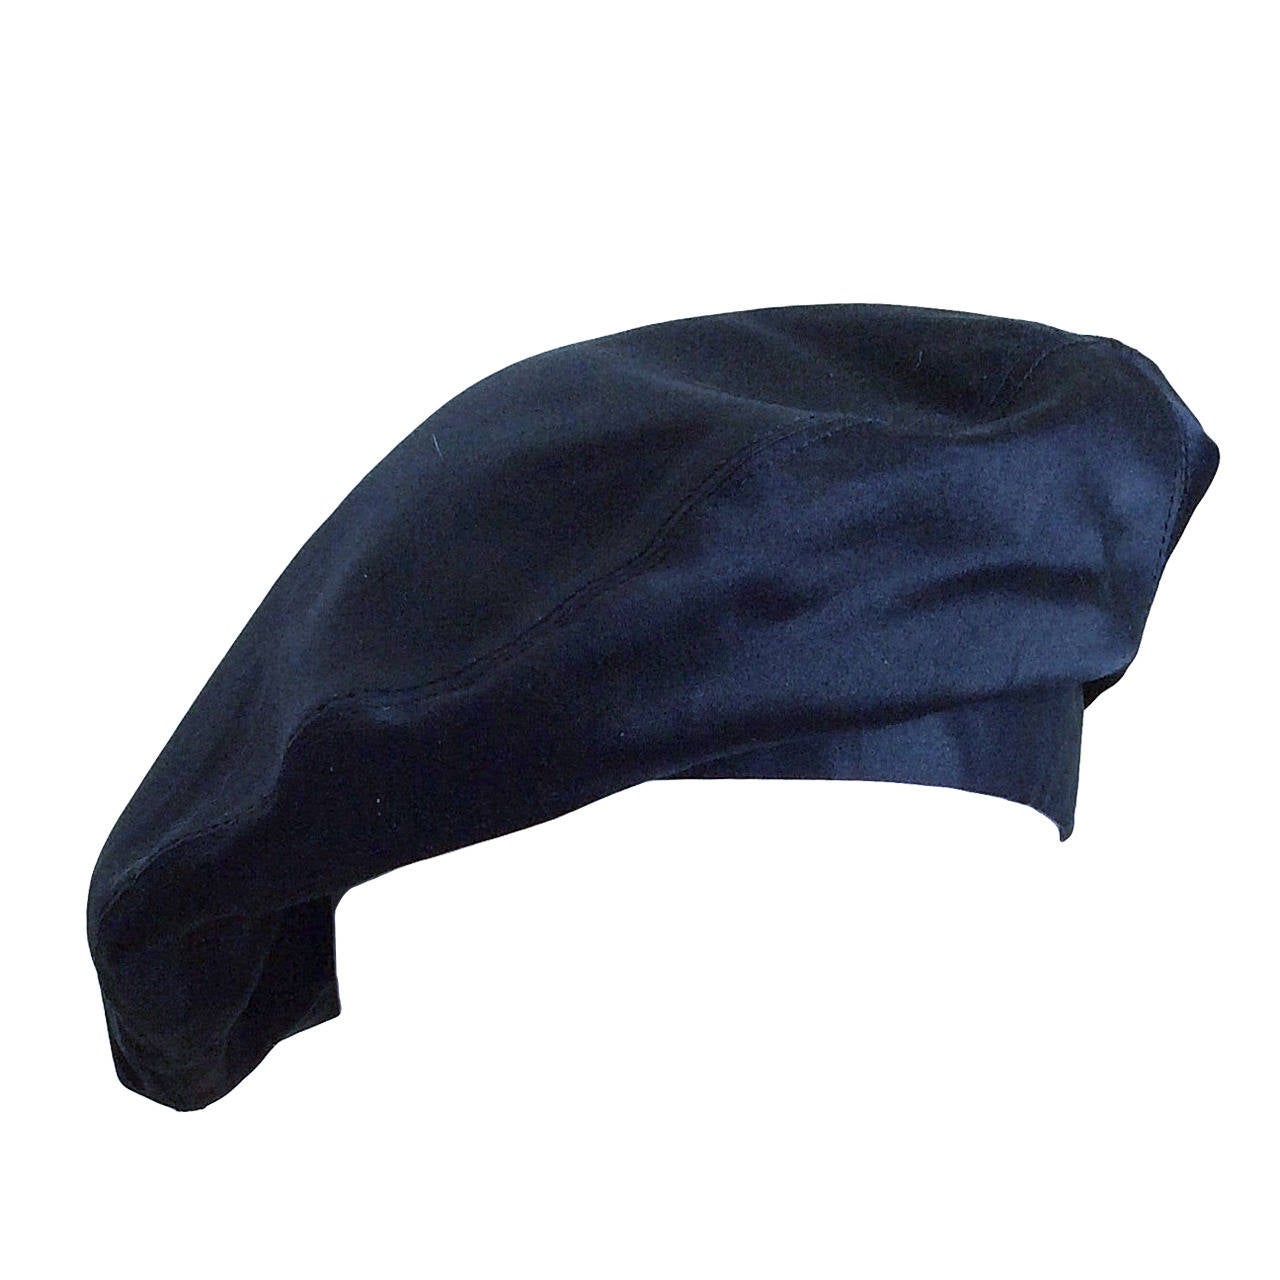 Beret Antique French c1900 wool black hat or cap medium size 